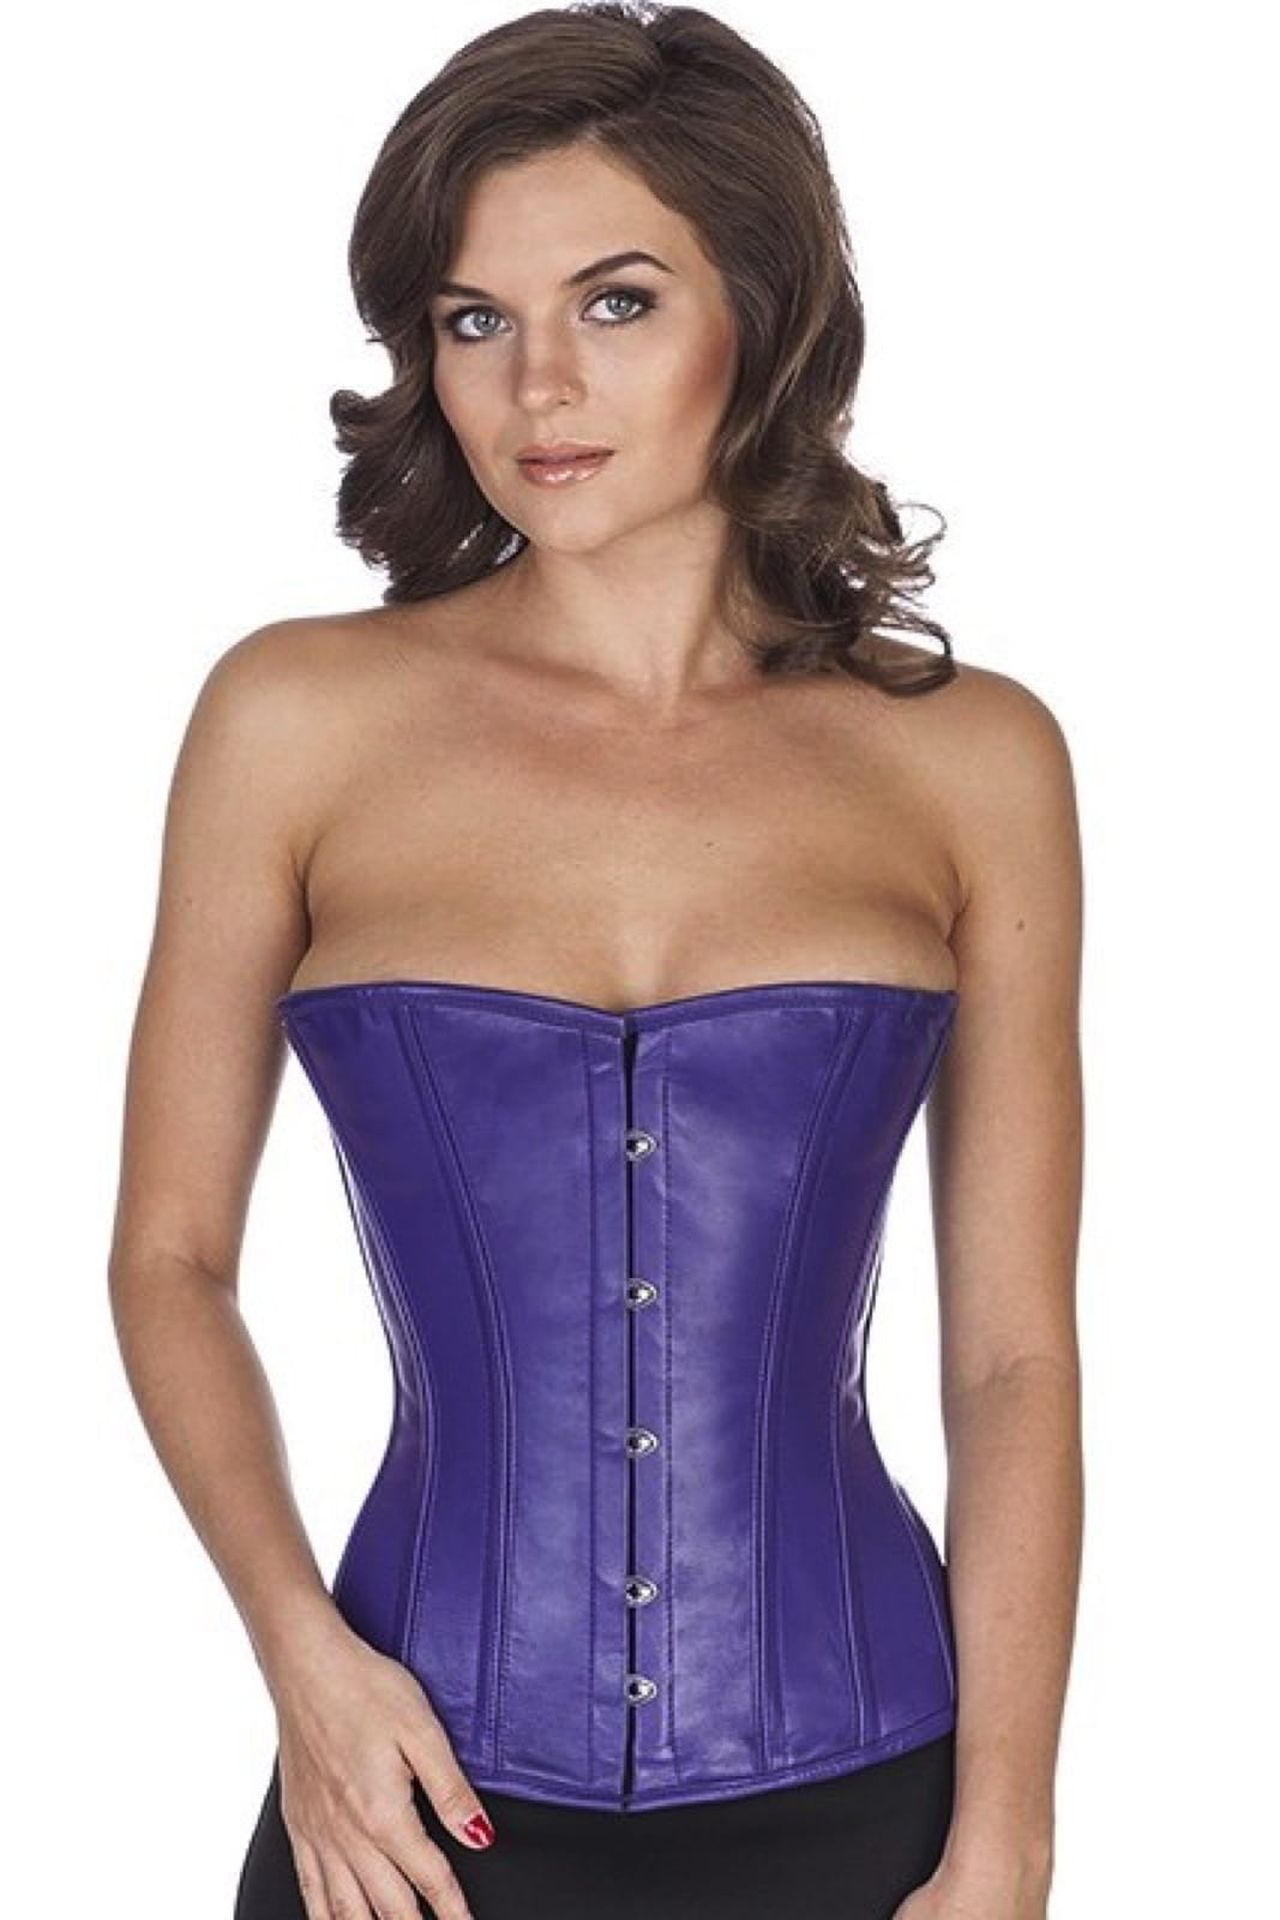 Corse violeta cuero medio pecho corset lh32